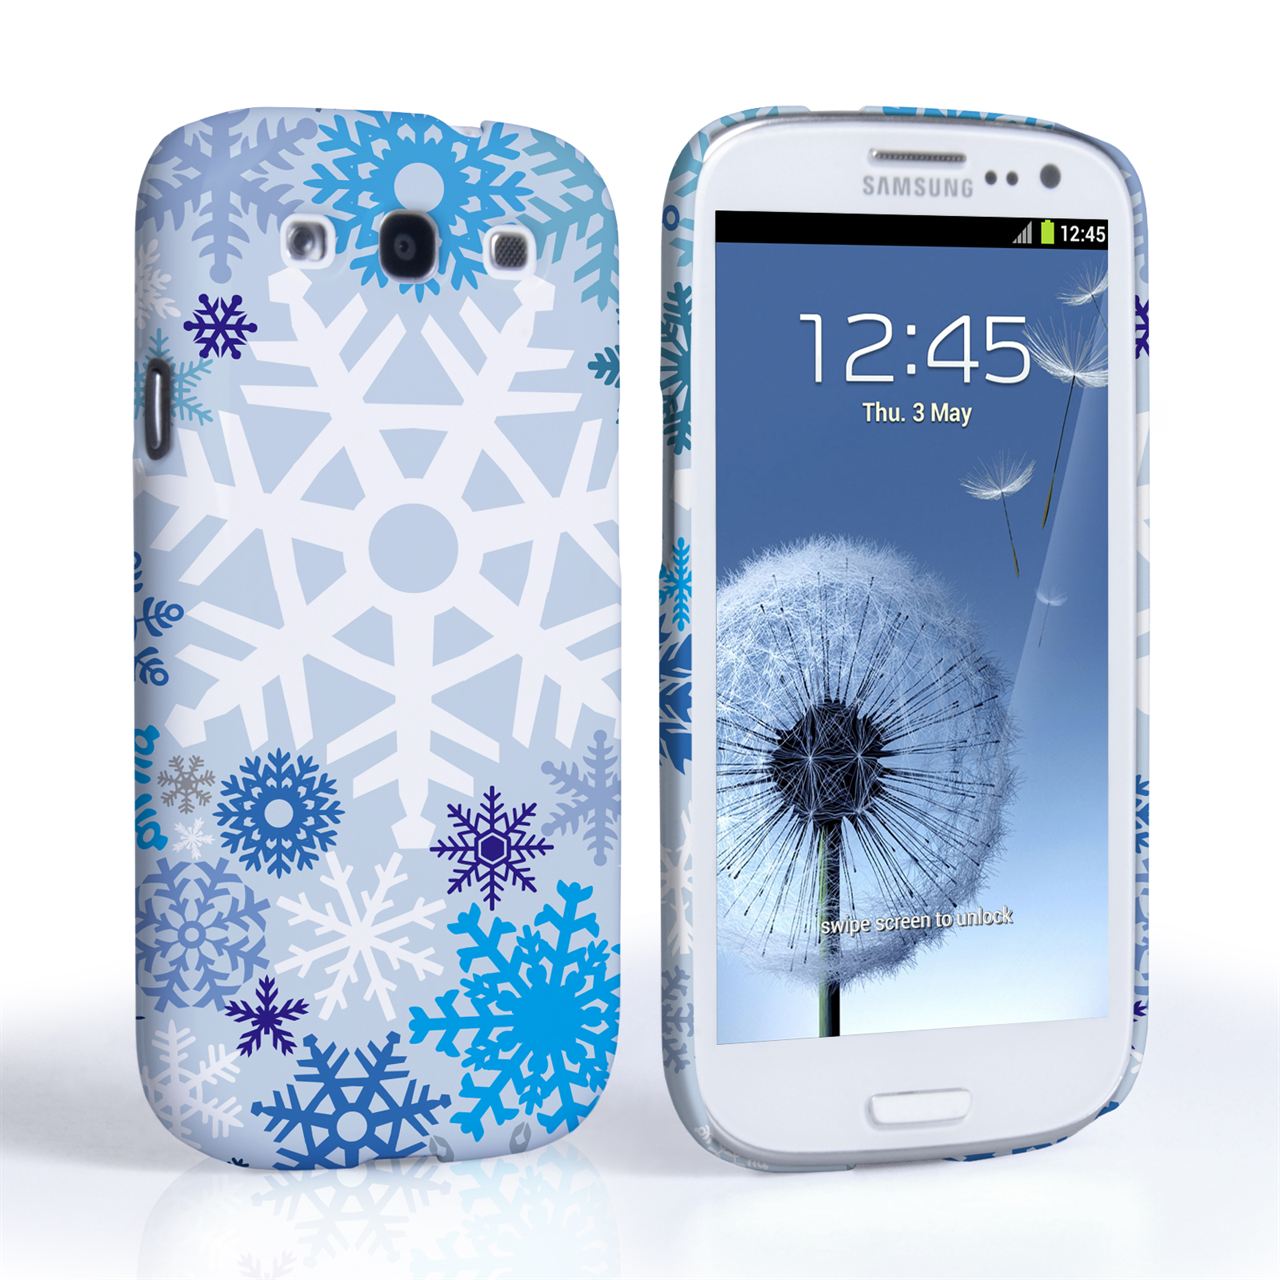 Caseflex Samsung Galaxy S3 Winter Christmas Snowflake Cover – Blue